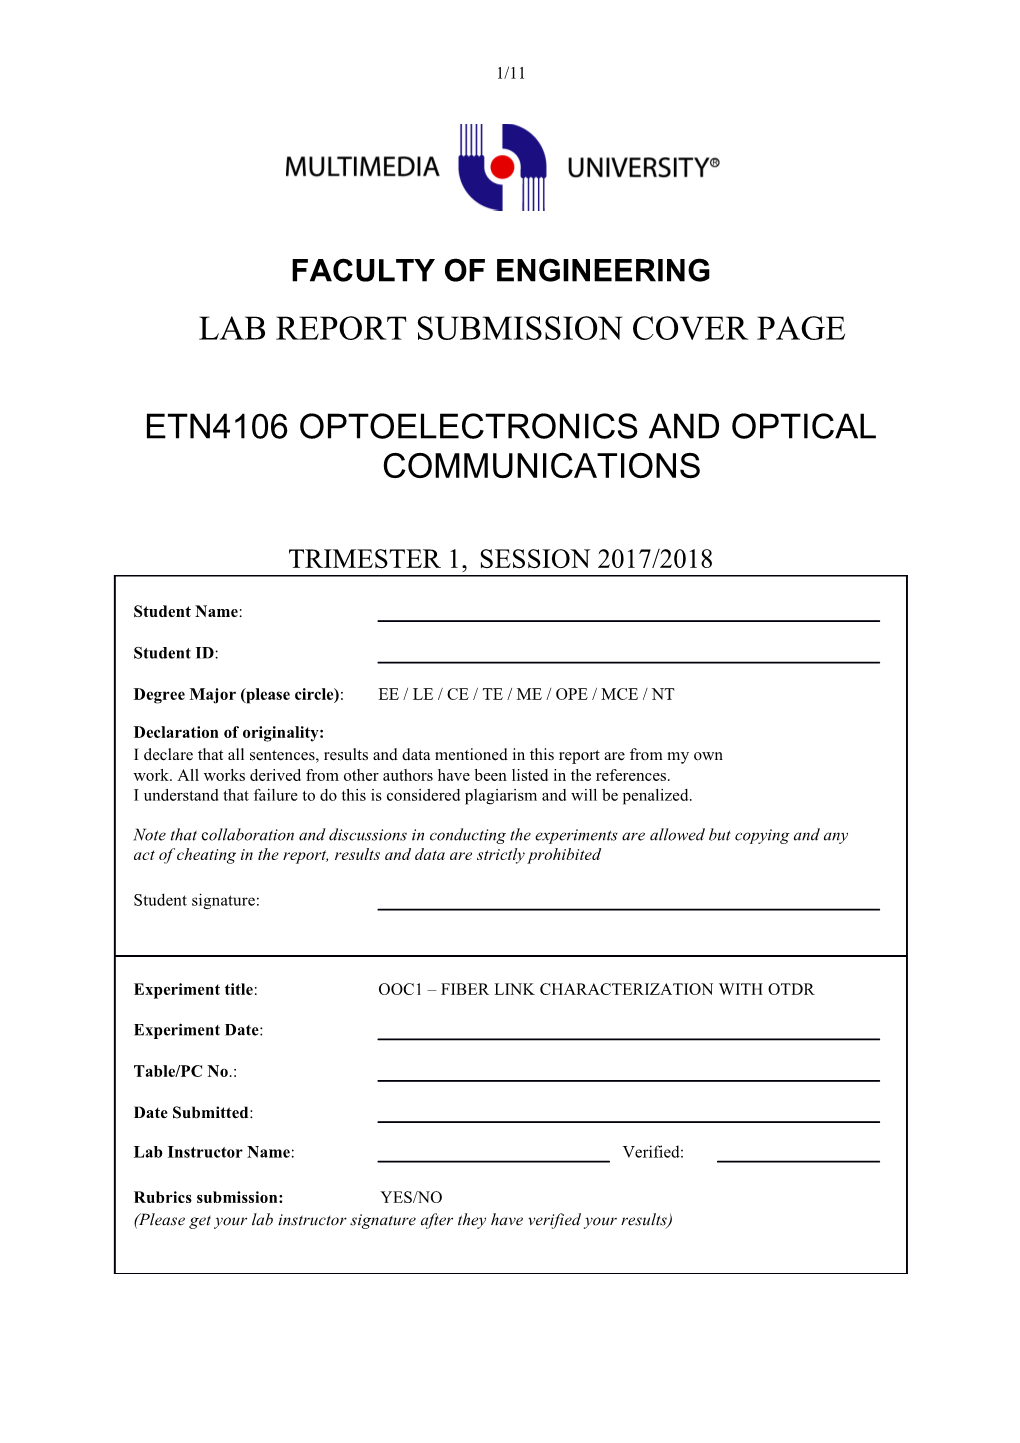 Etn4106 Optoelectronics and Optical Communications